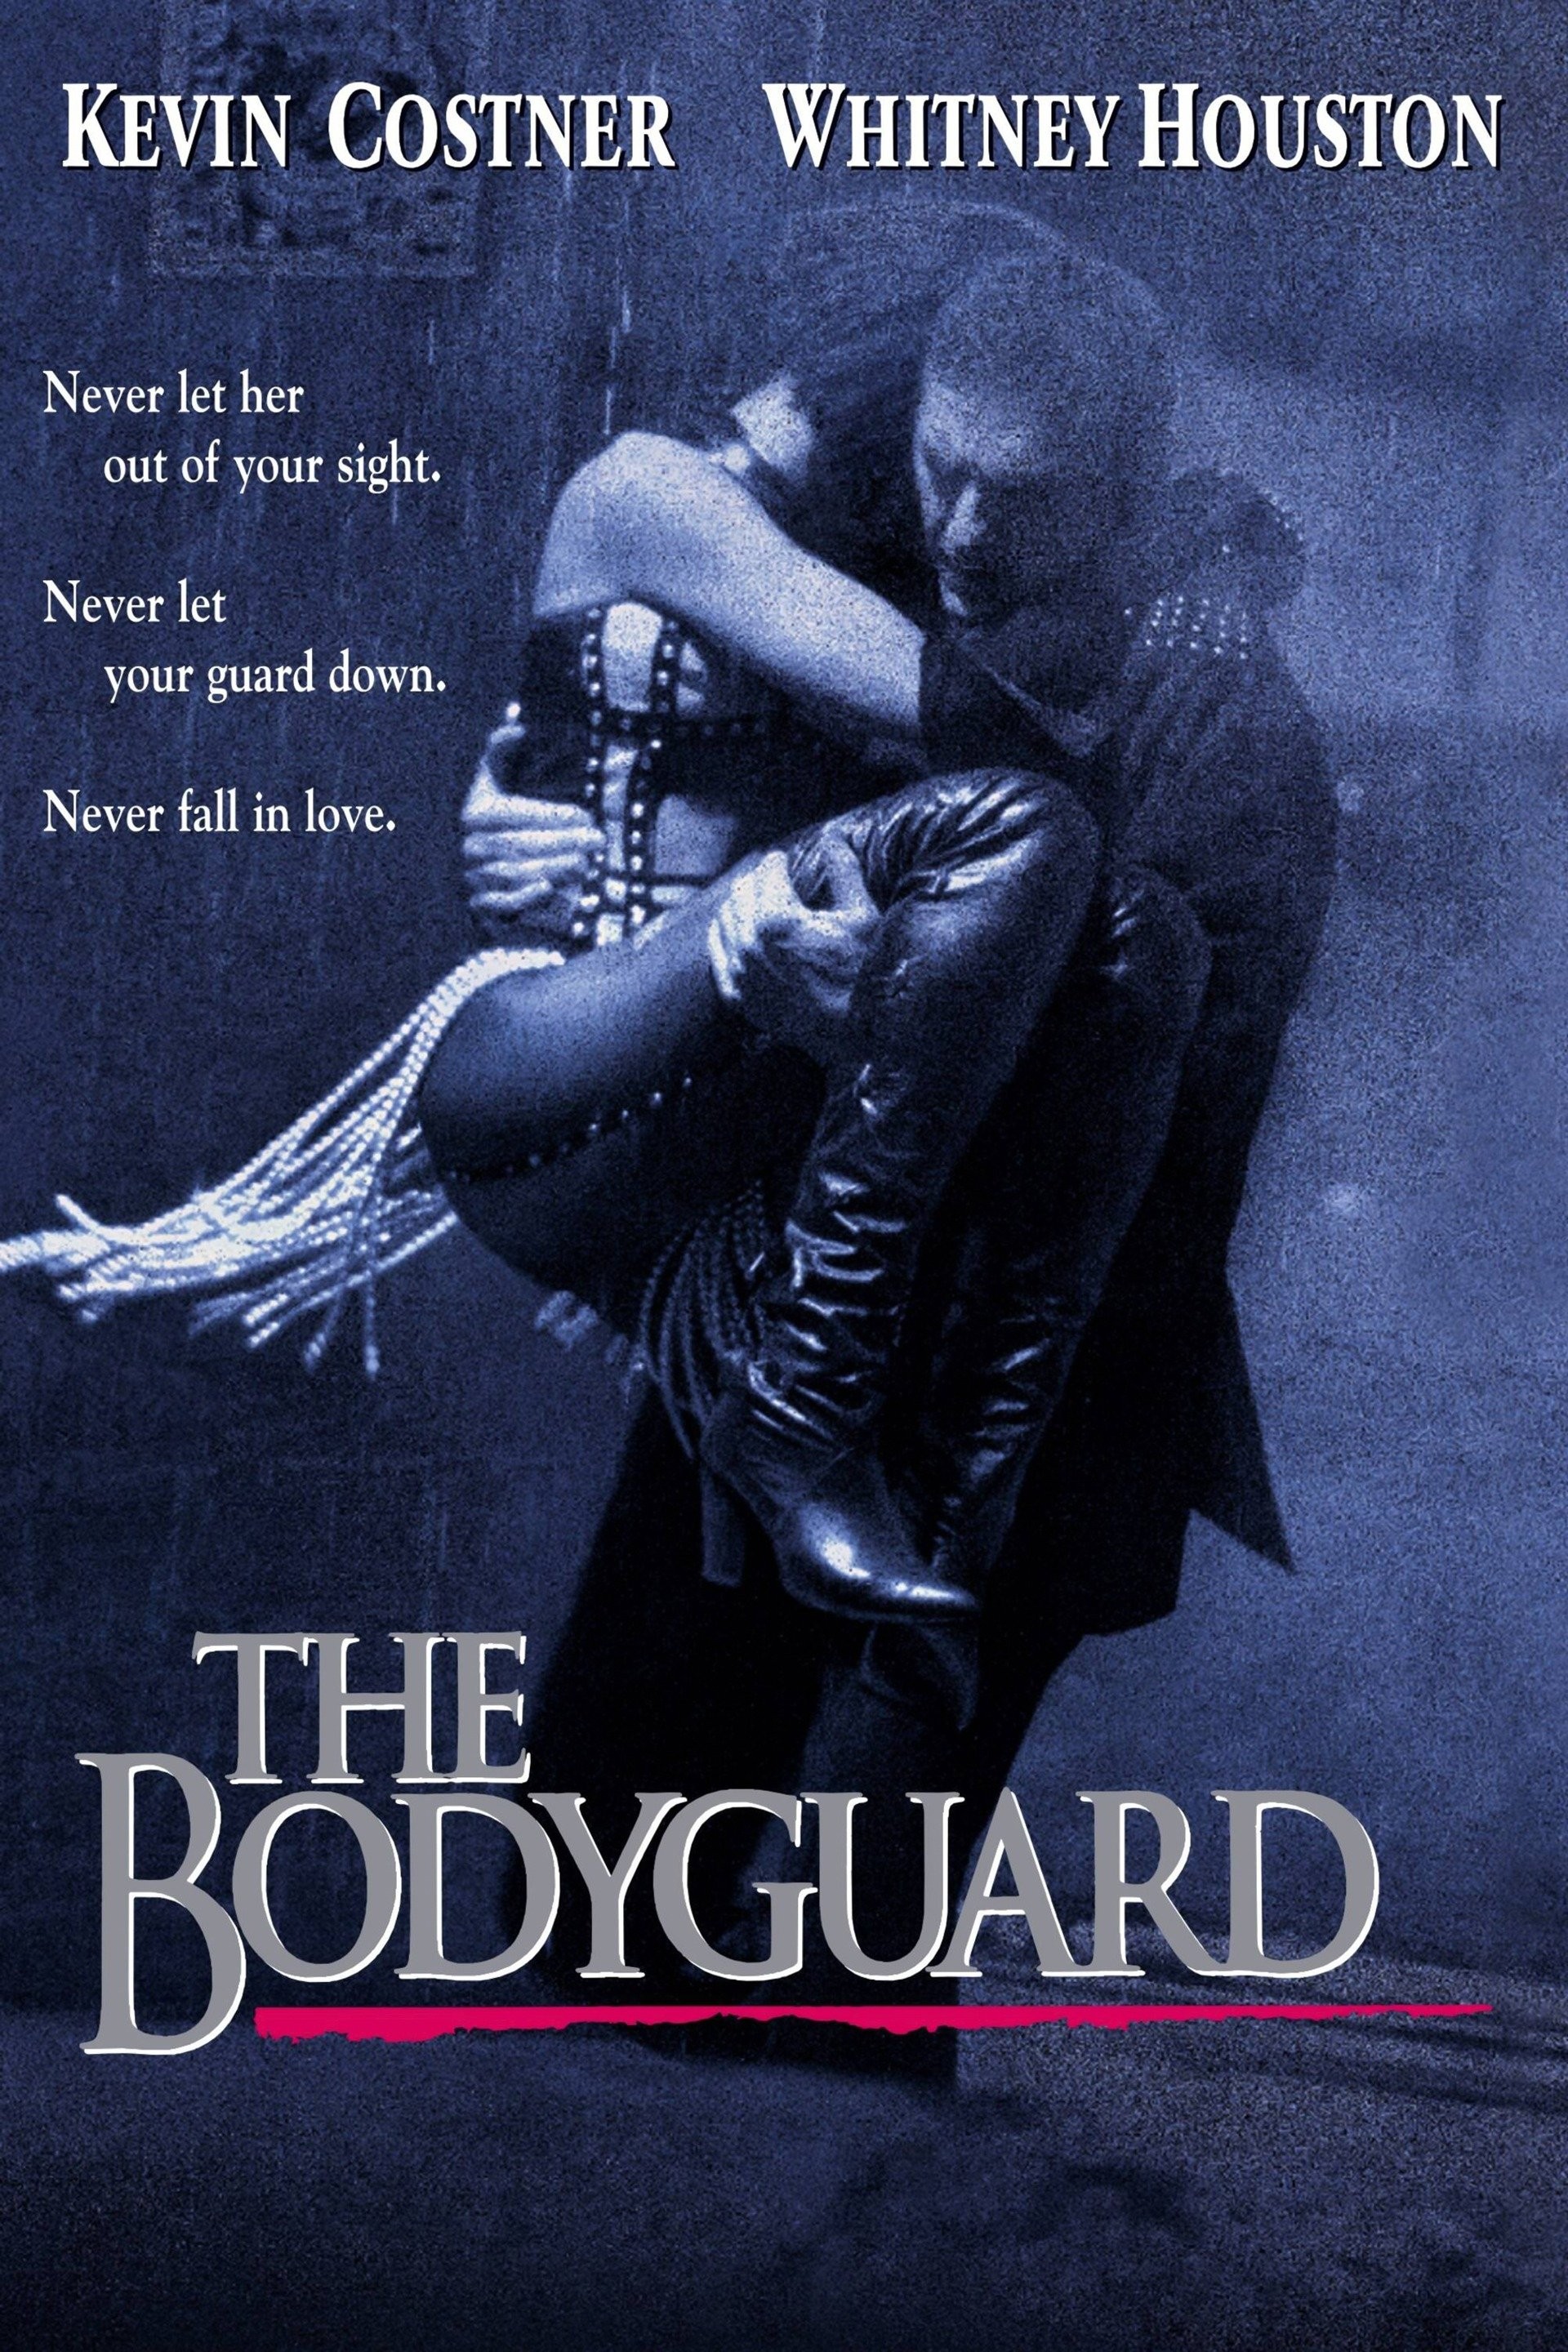 The Bodyguard (1992 film) - Wikipedia